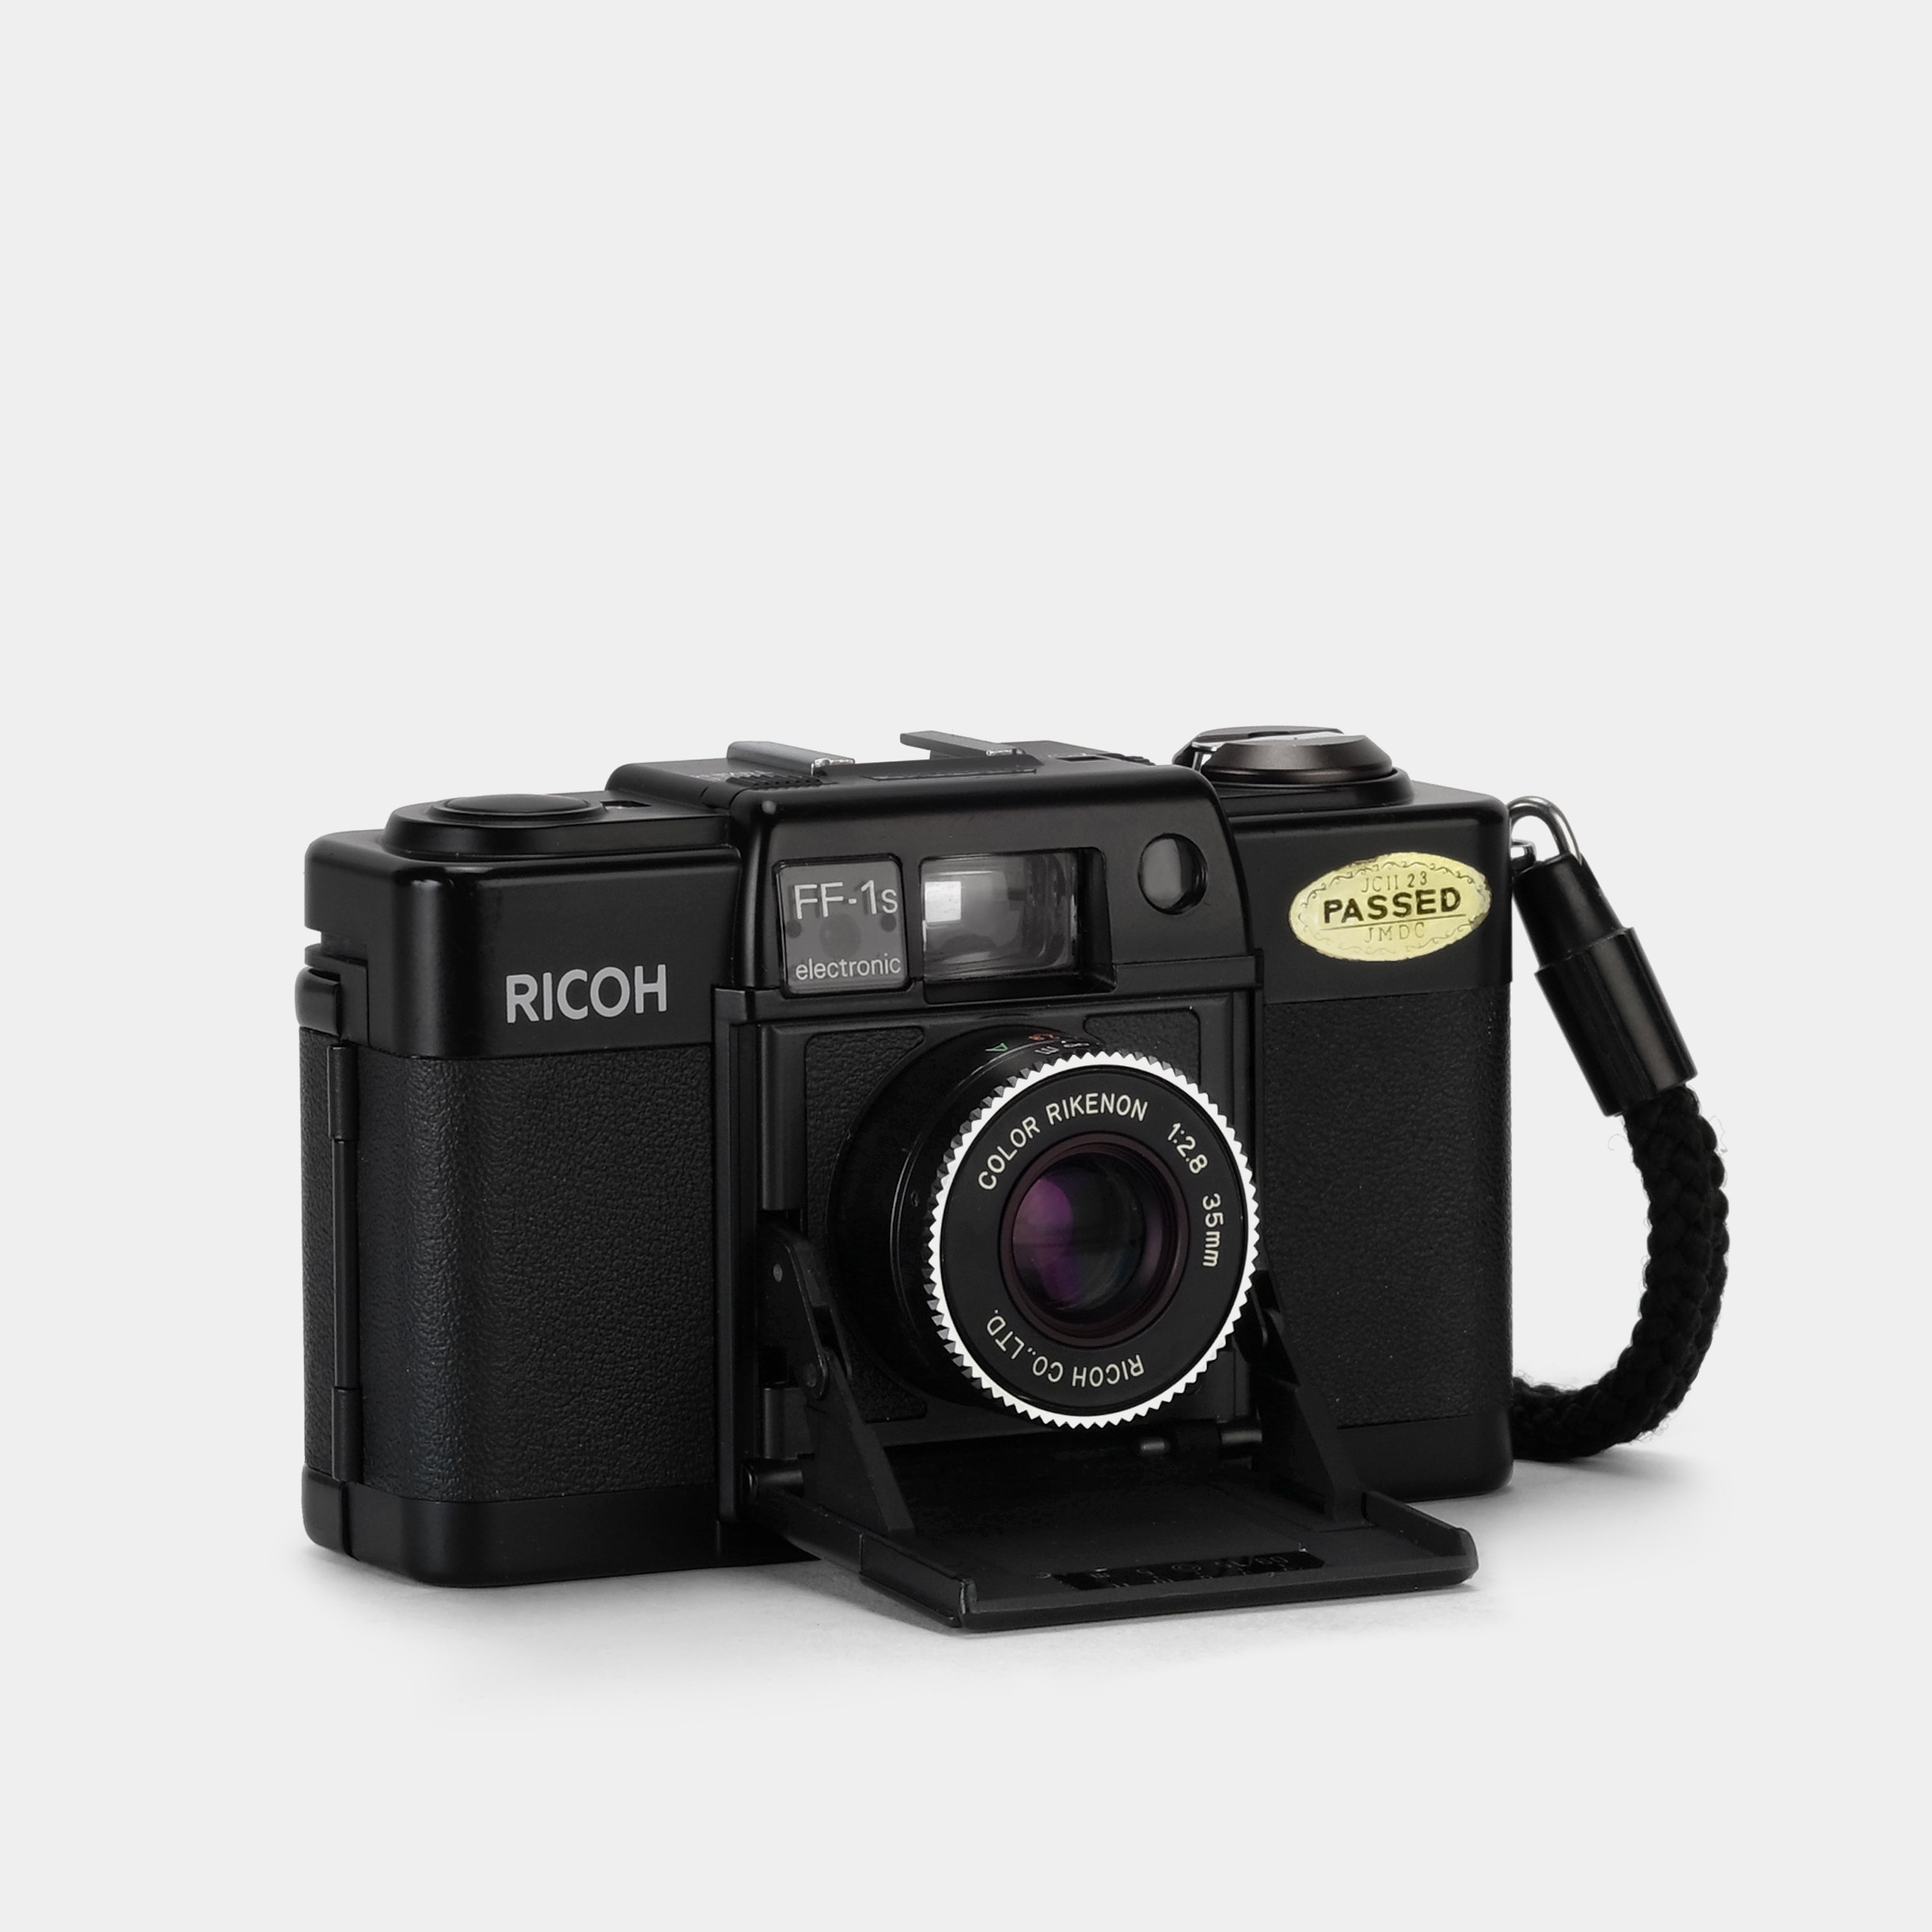 Ricoh FF-1s 35mm Scale Focus Film Camera